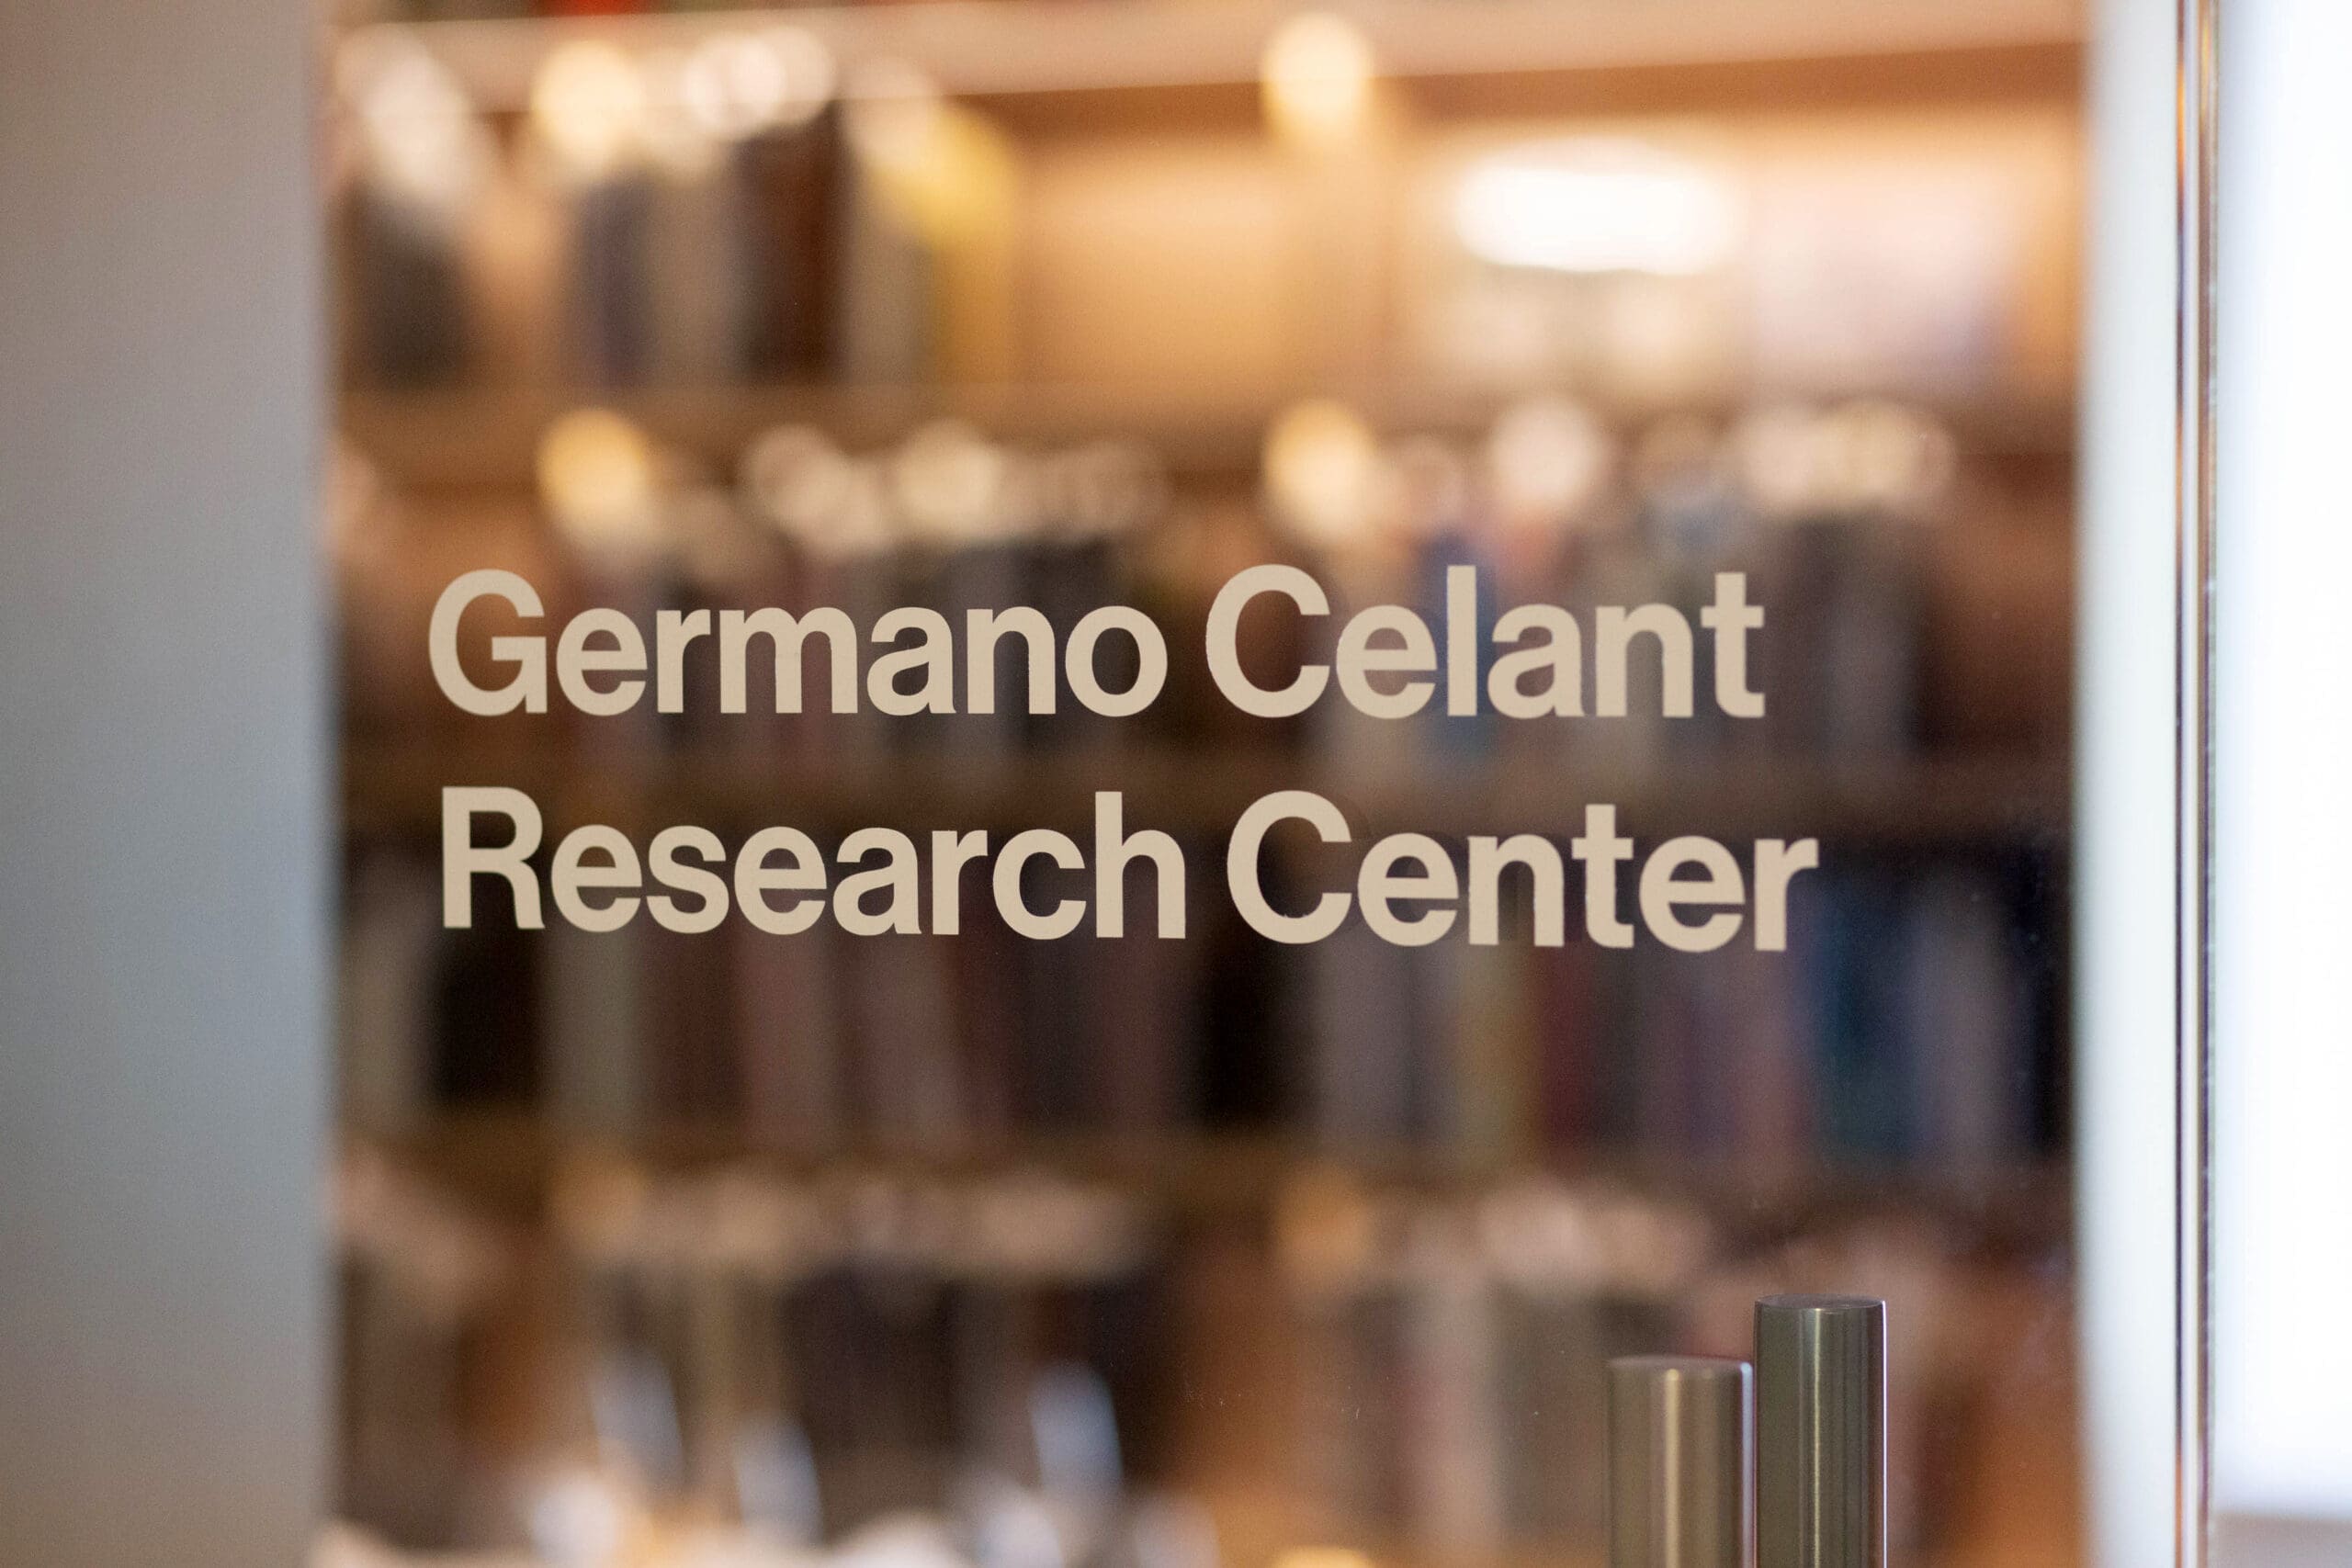 Germano Celant Research Center - Cold Spring New York - Magazzino Italian Art - Arte povera italiana - Germano Celant